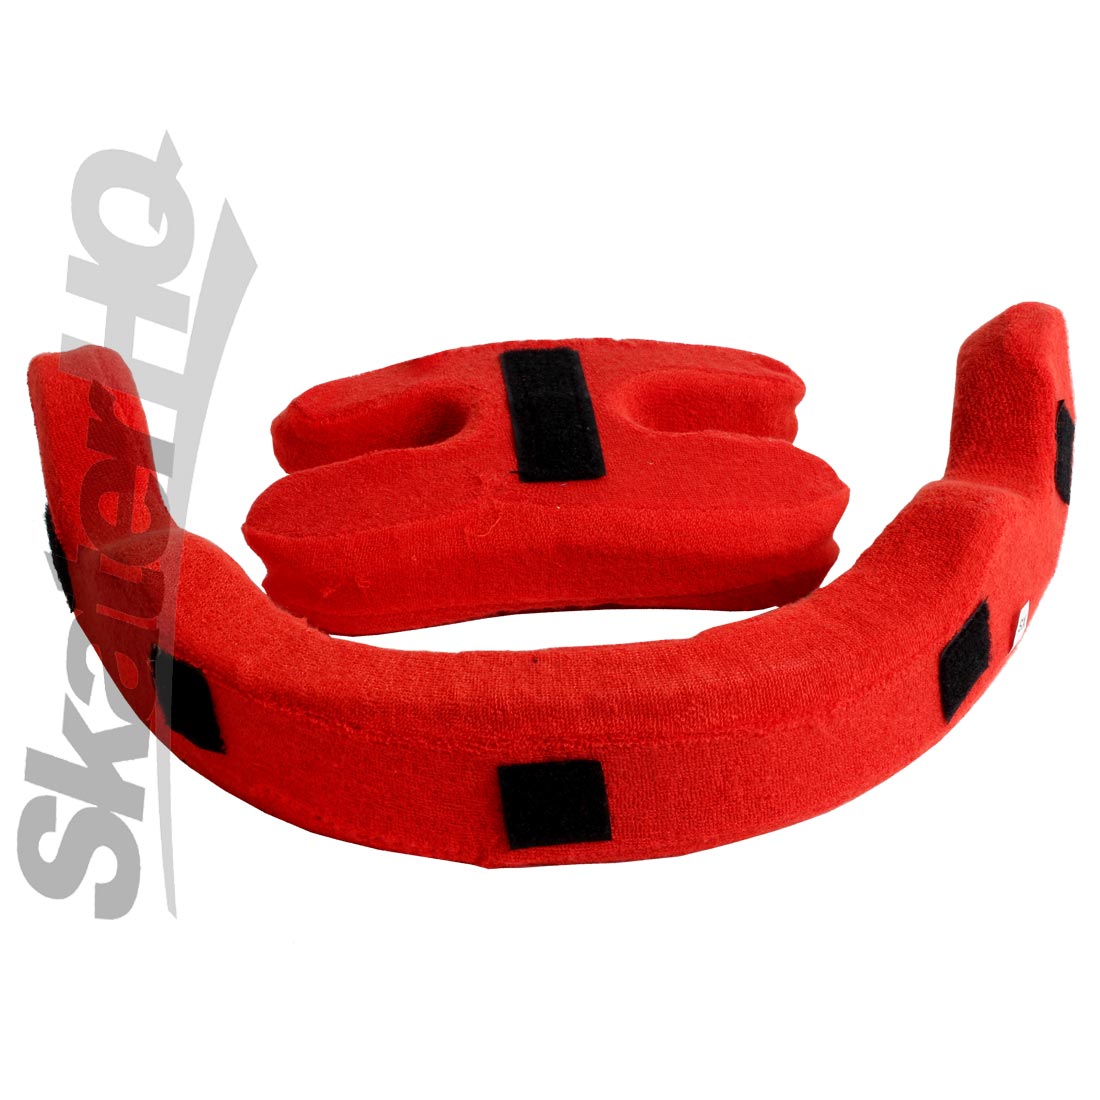 Triple 8 Sweatsaver Liner - Red - XXL Helmet liners